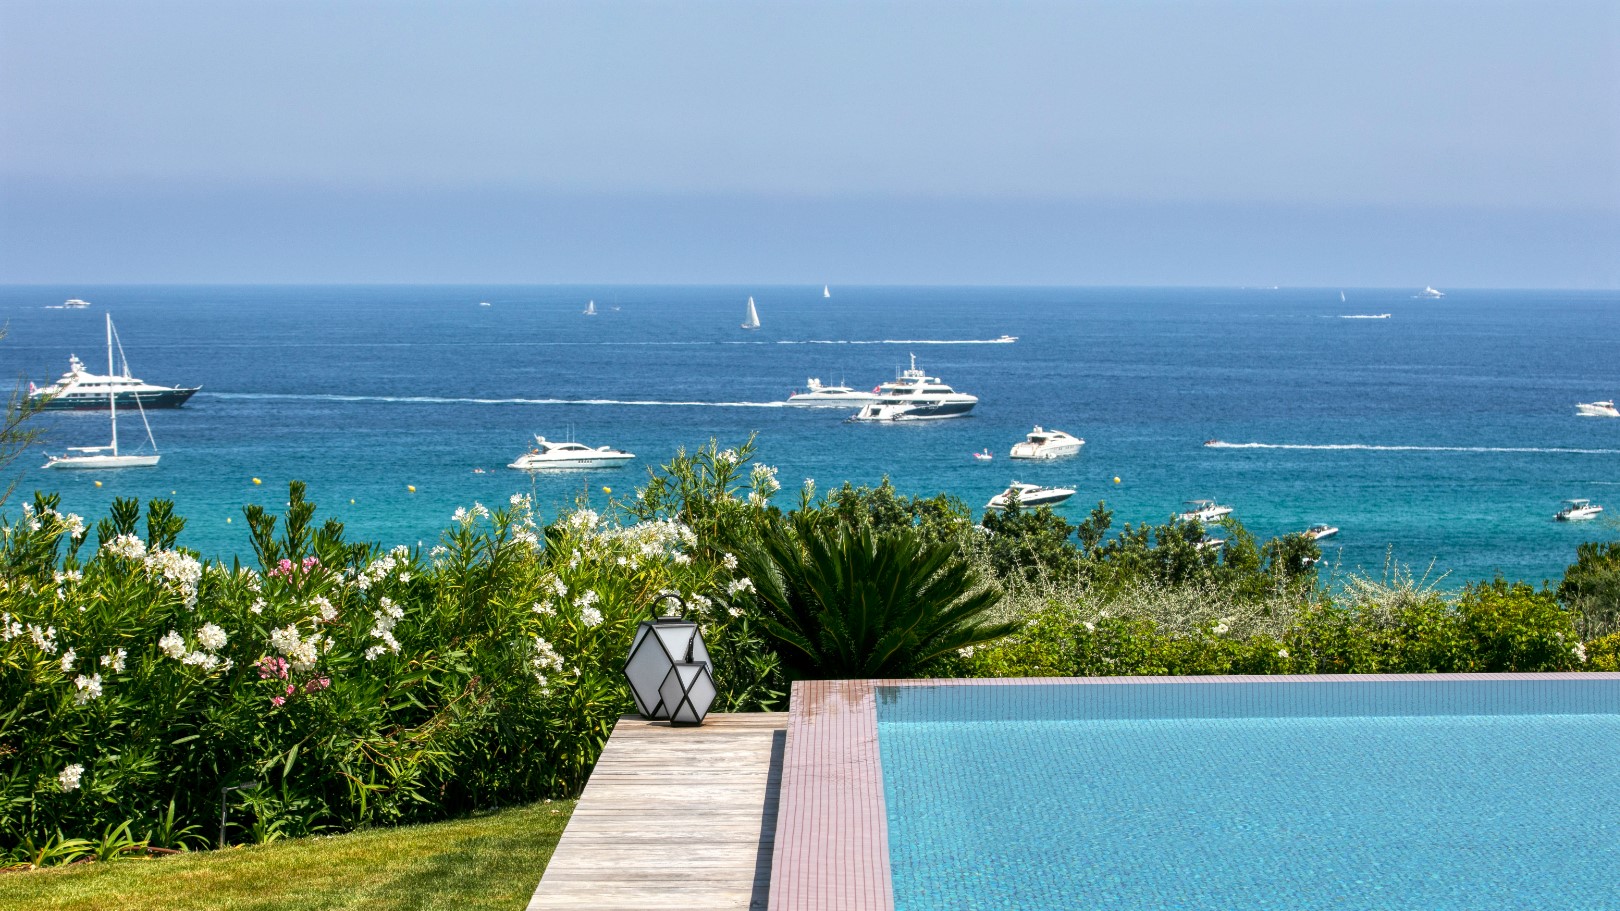 South of France Luxury Villa Rentals overlooking the ocean